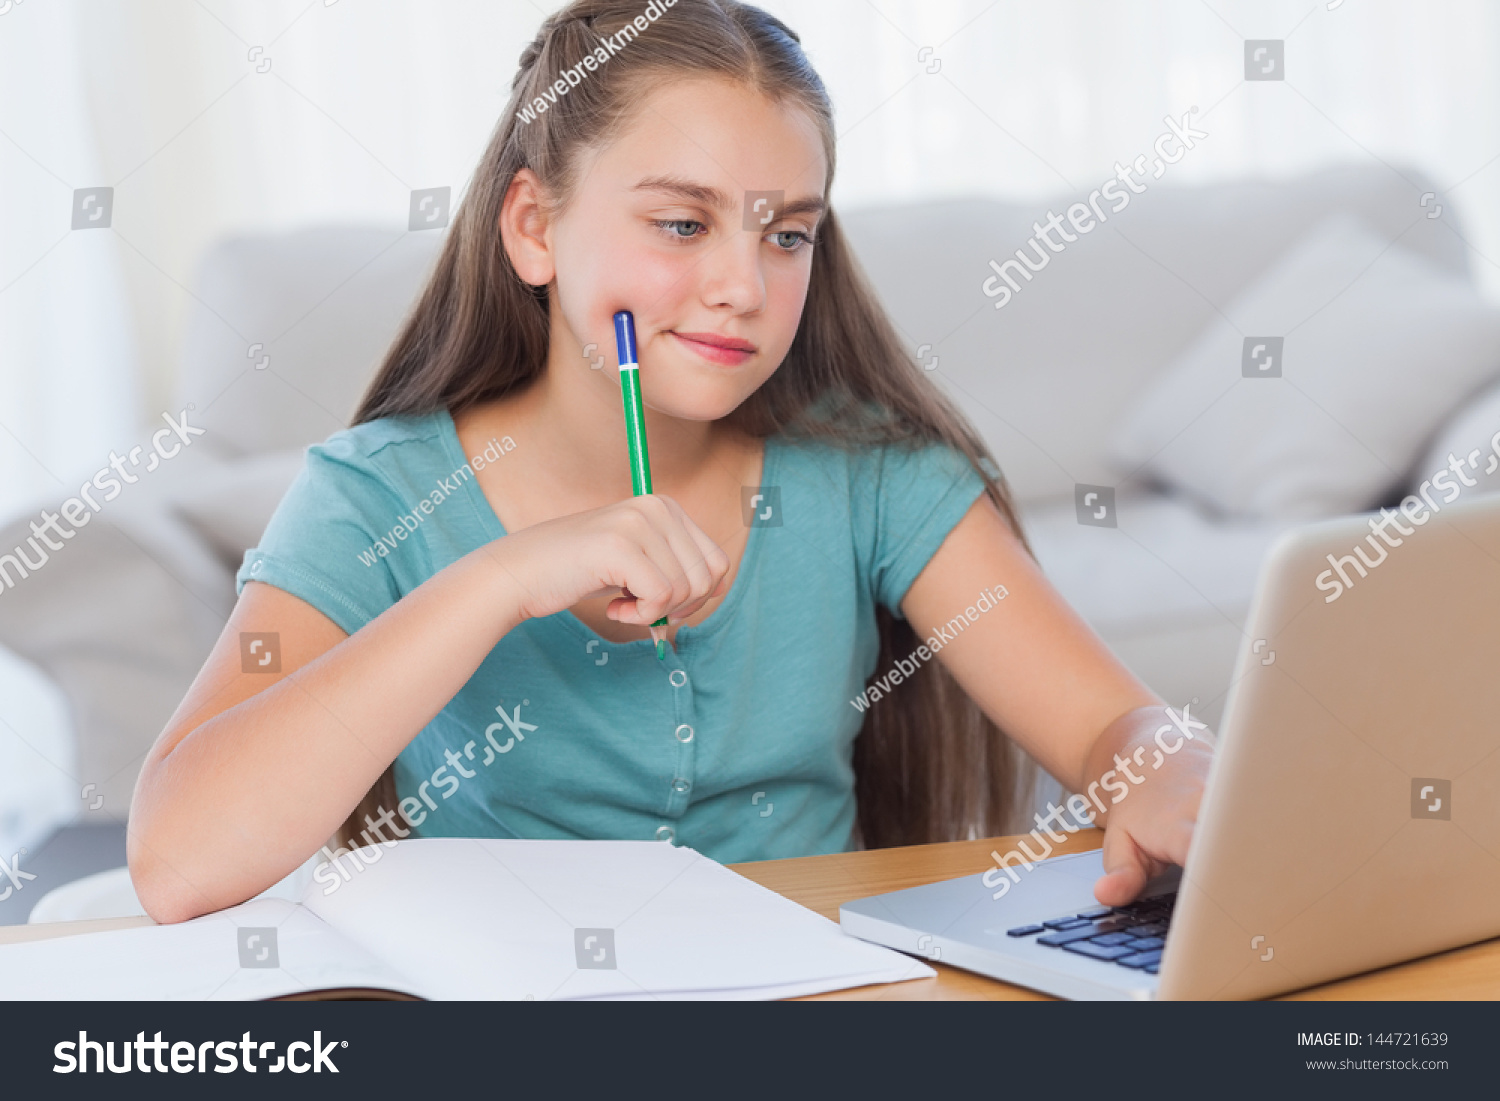 Homework computer